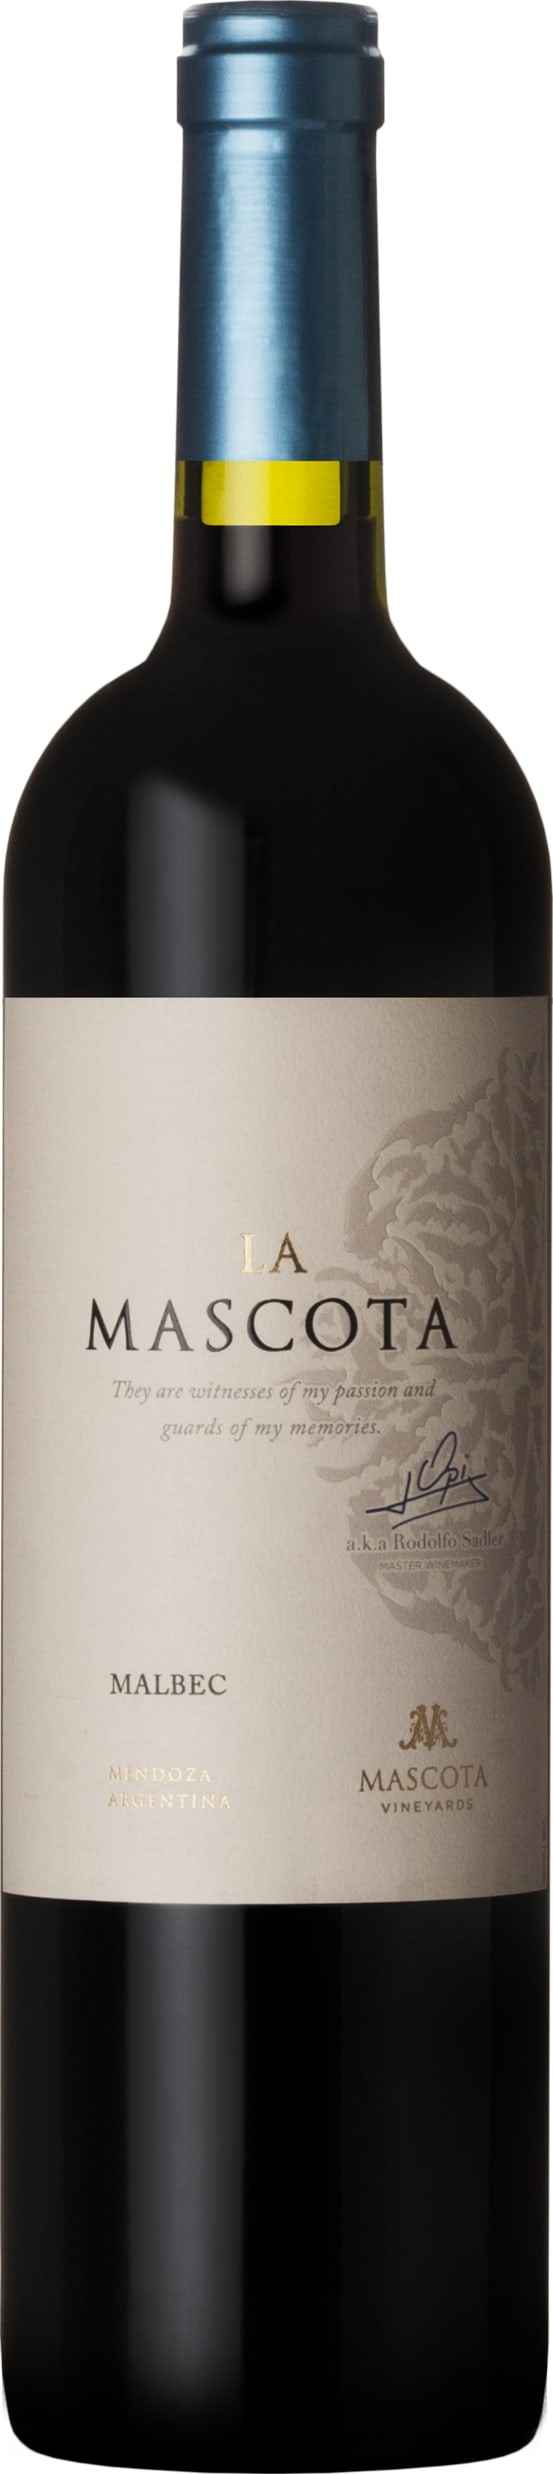 La Mascota Malbec 2021 75cl - Buy La Mascota Wines from GREAT WINES DIRECT wine shop